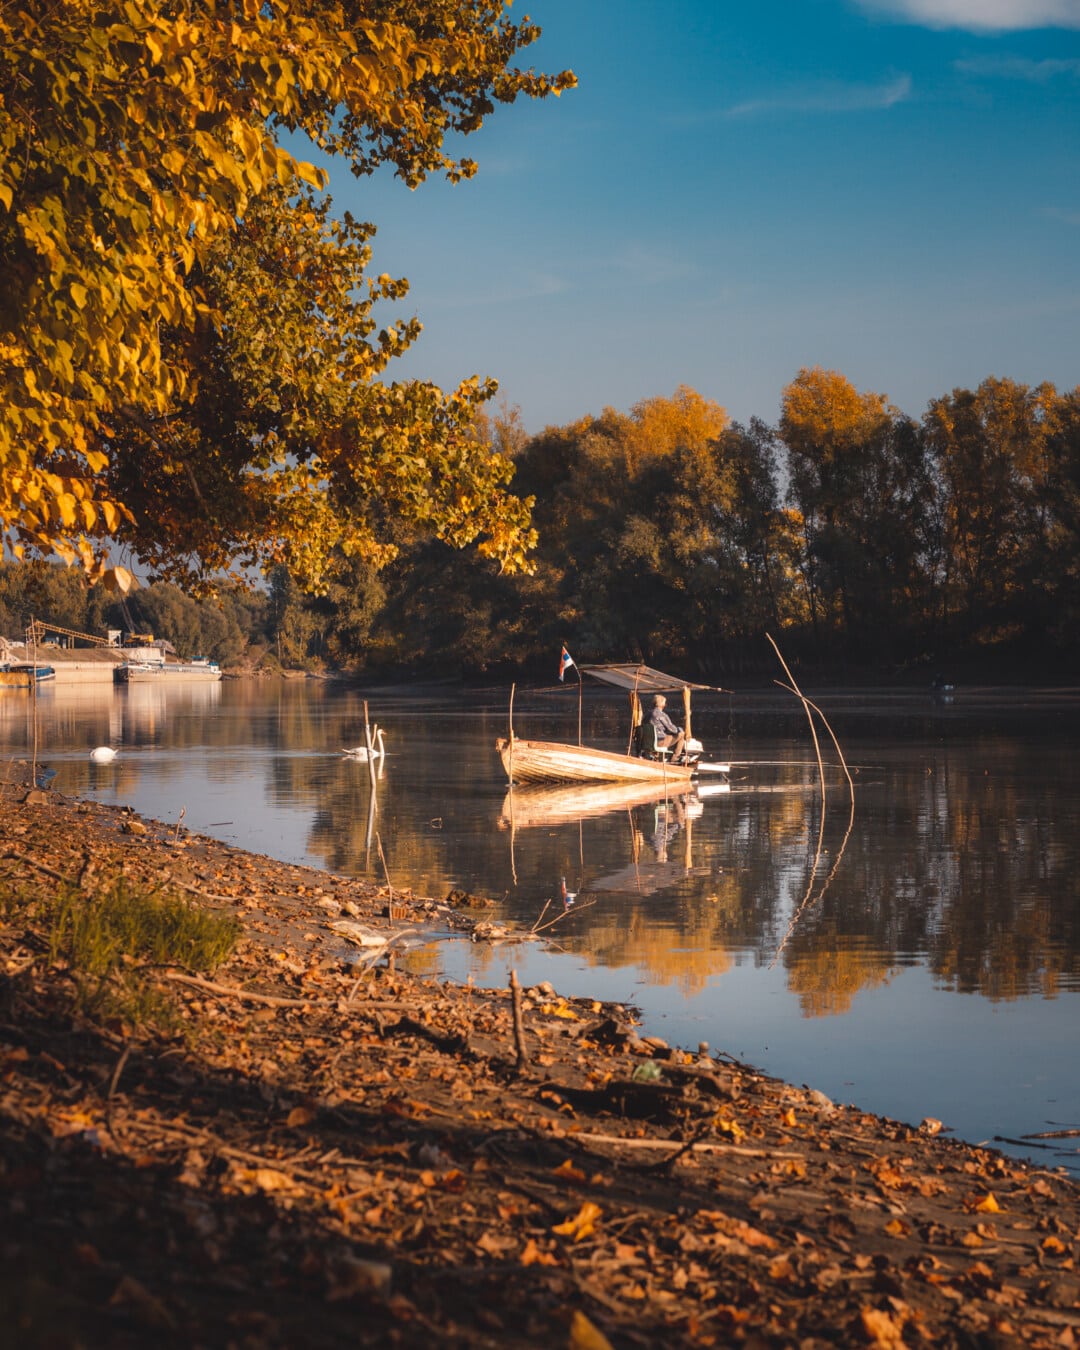 autumn season, october, fishing boat, fishing, recreation, idyllic, river, lake, reflection, water